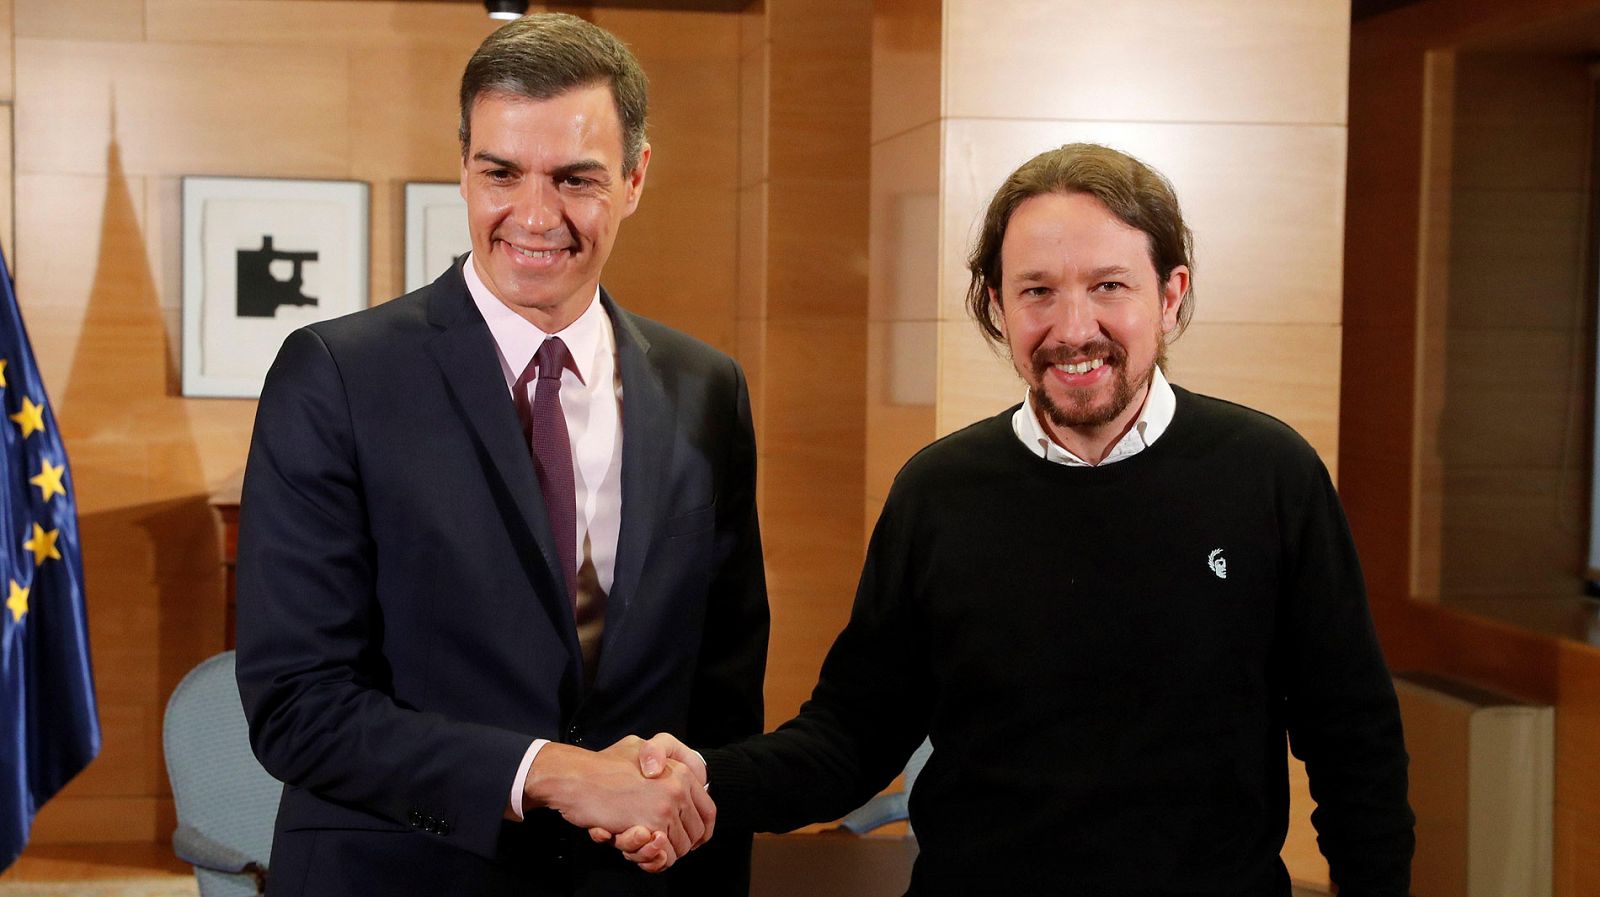 Investidura - Sánchez e Iglesias pactan negociar un "gobierno de cooperación" - RTVE.es